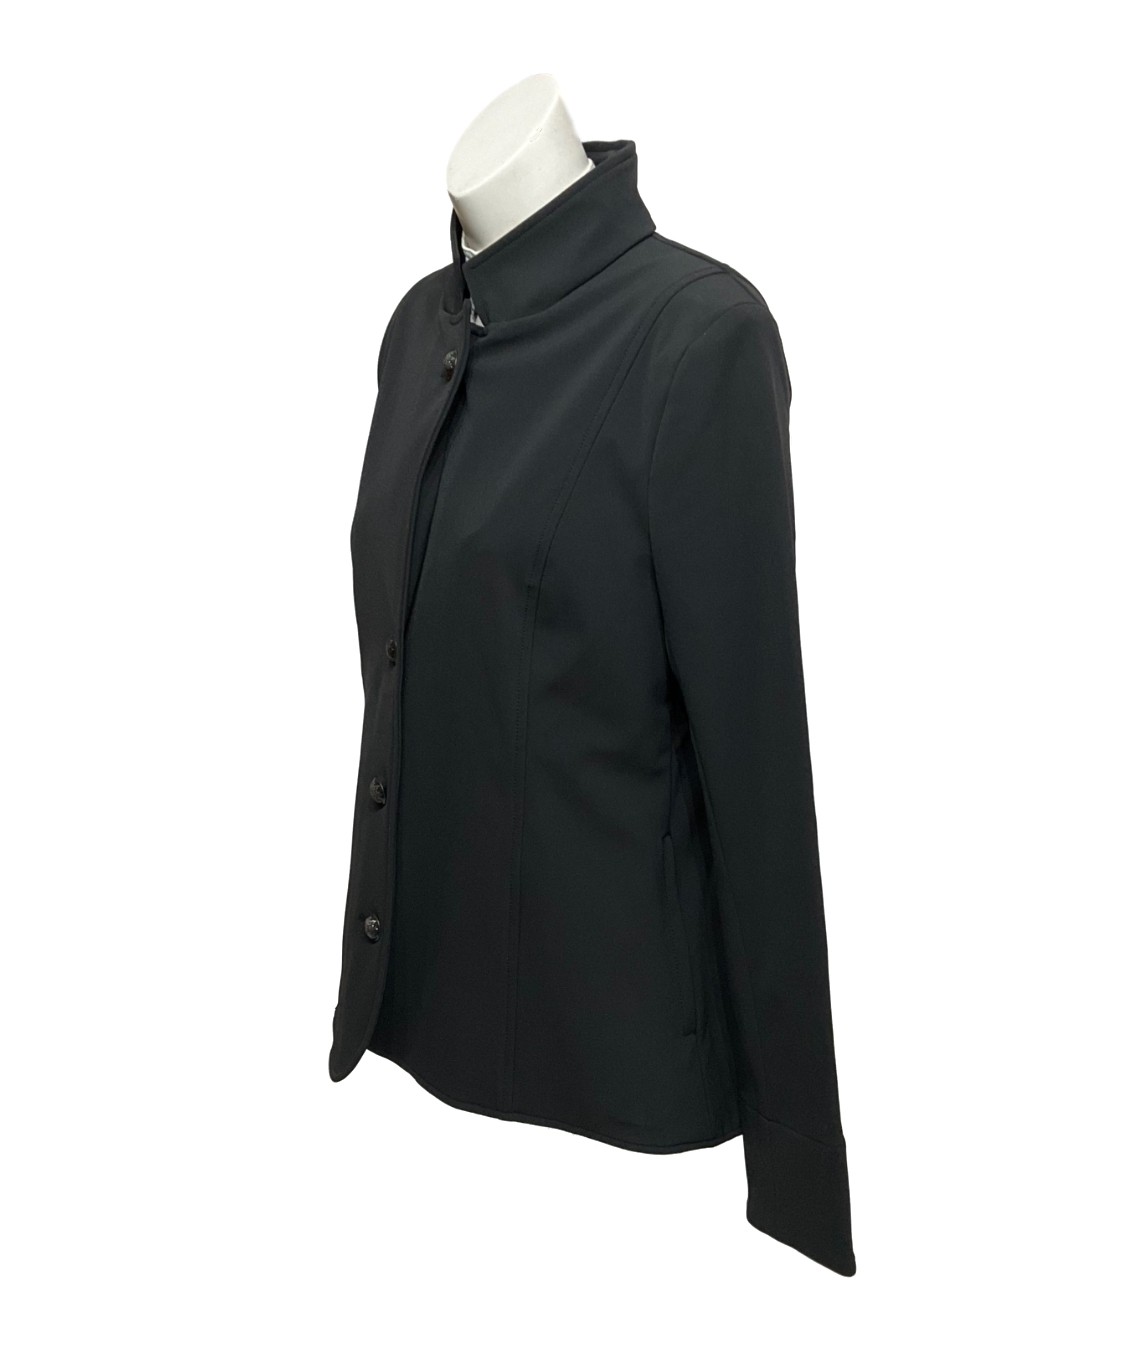 airshow jacket black large side